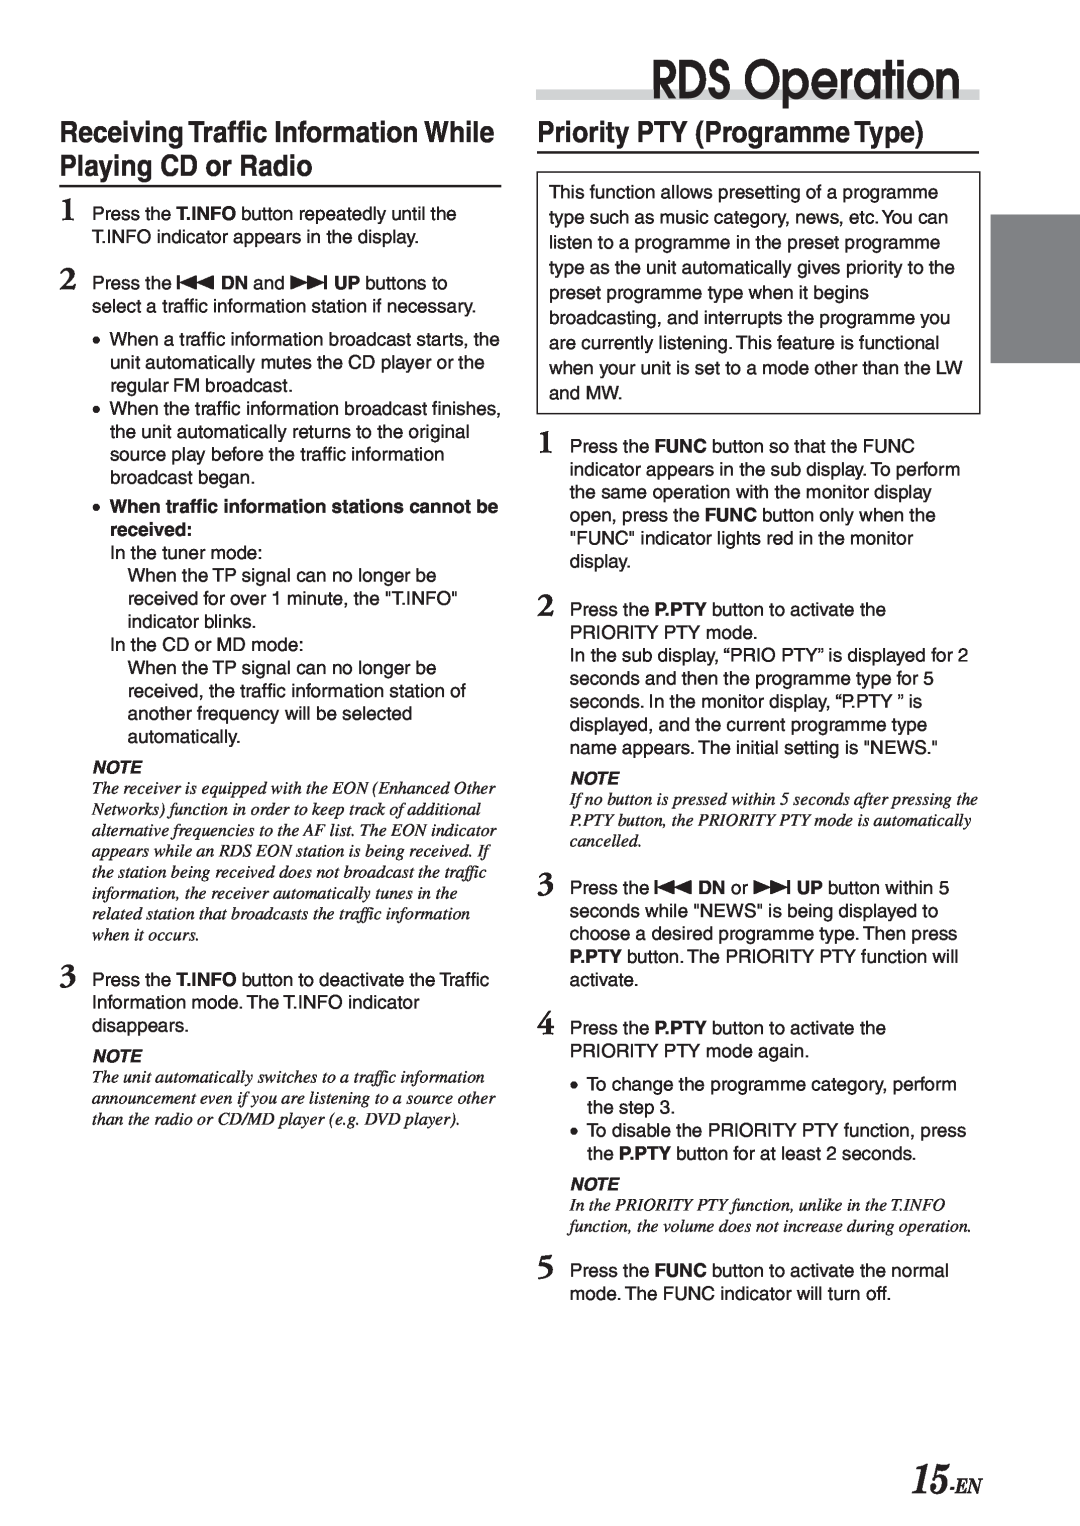 Alpine CVA-1003R owner manual Priority PTY Programme Type, 15-EN, RDS Operation 